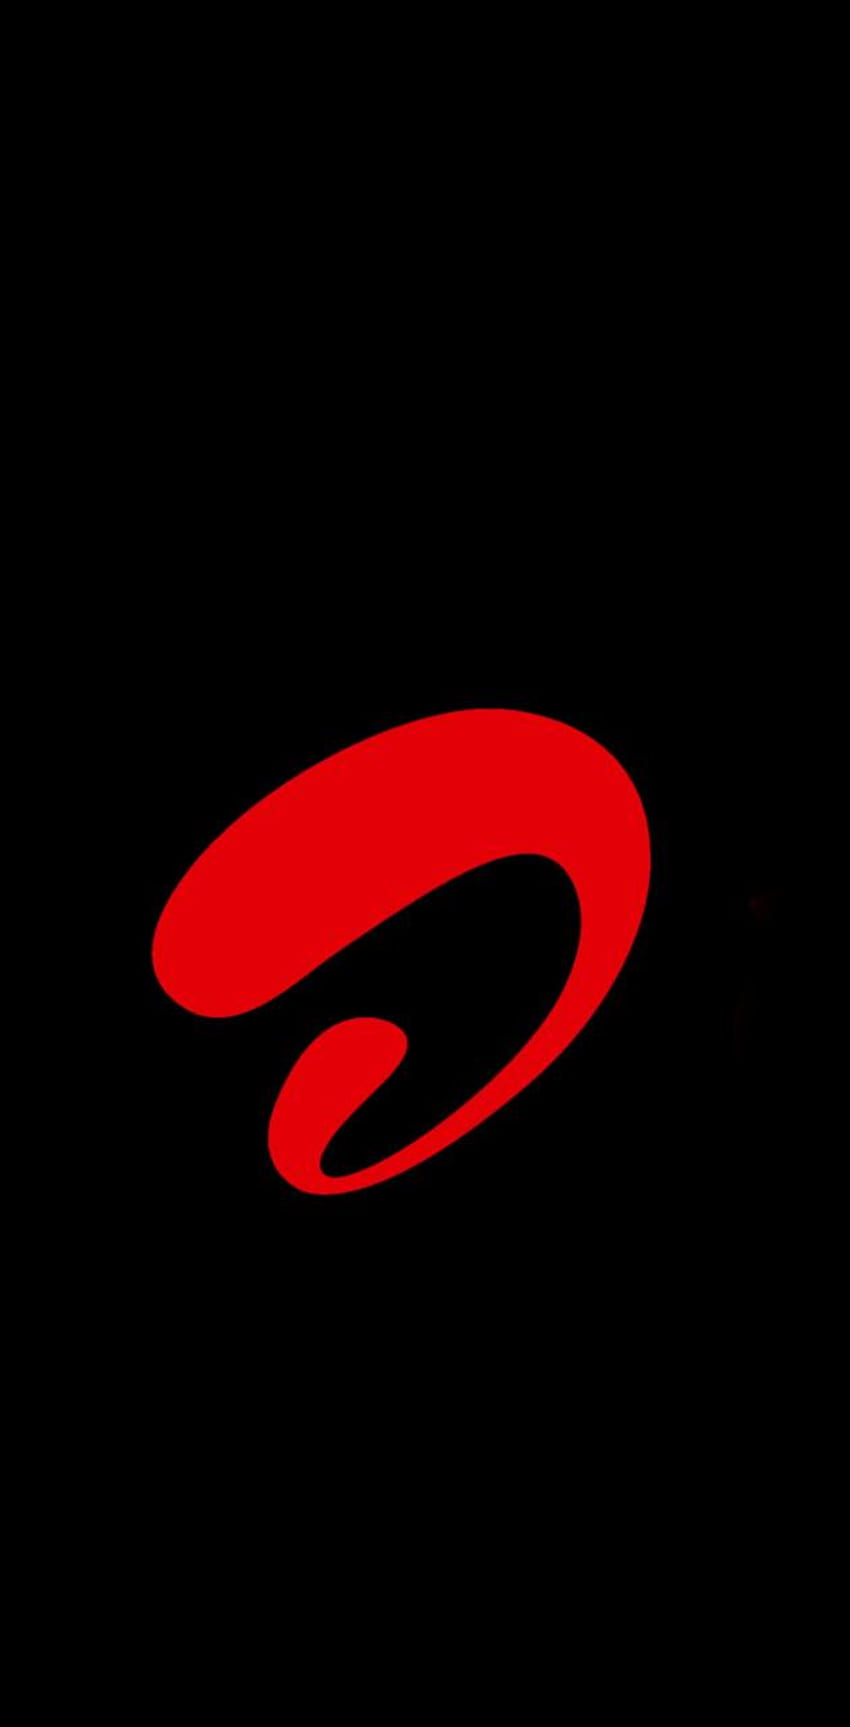 Free High-Quality Airtel Payment Bank Logo Transparent for Creative Design